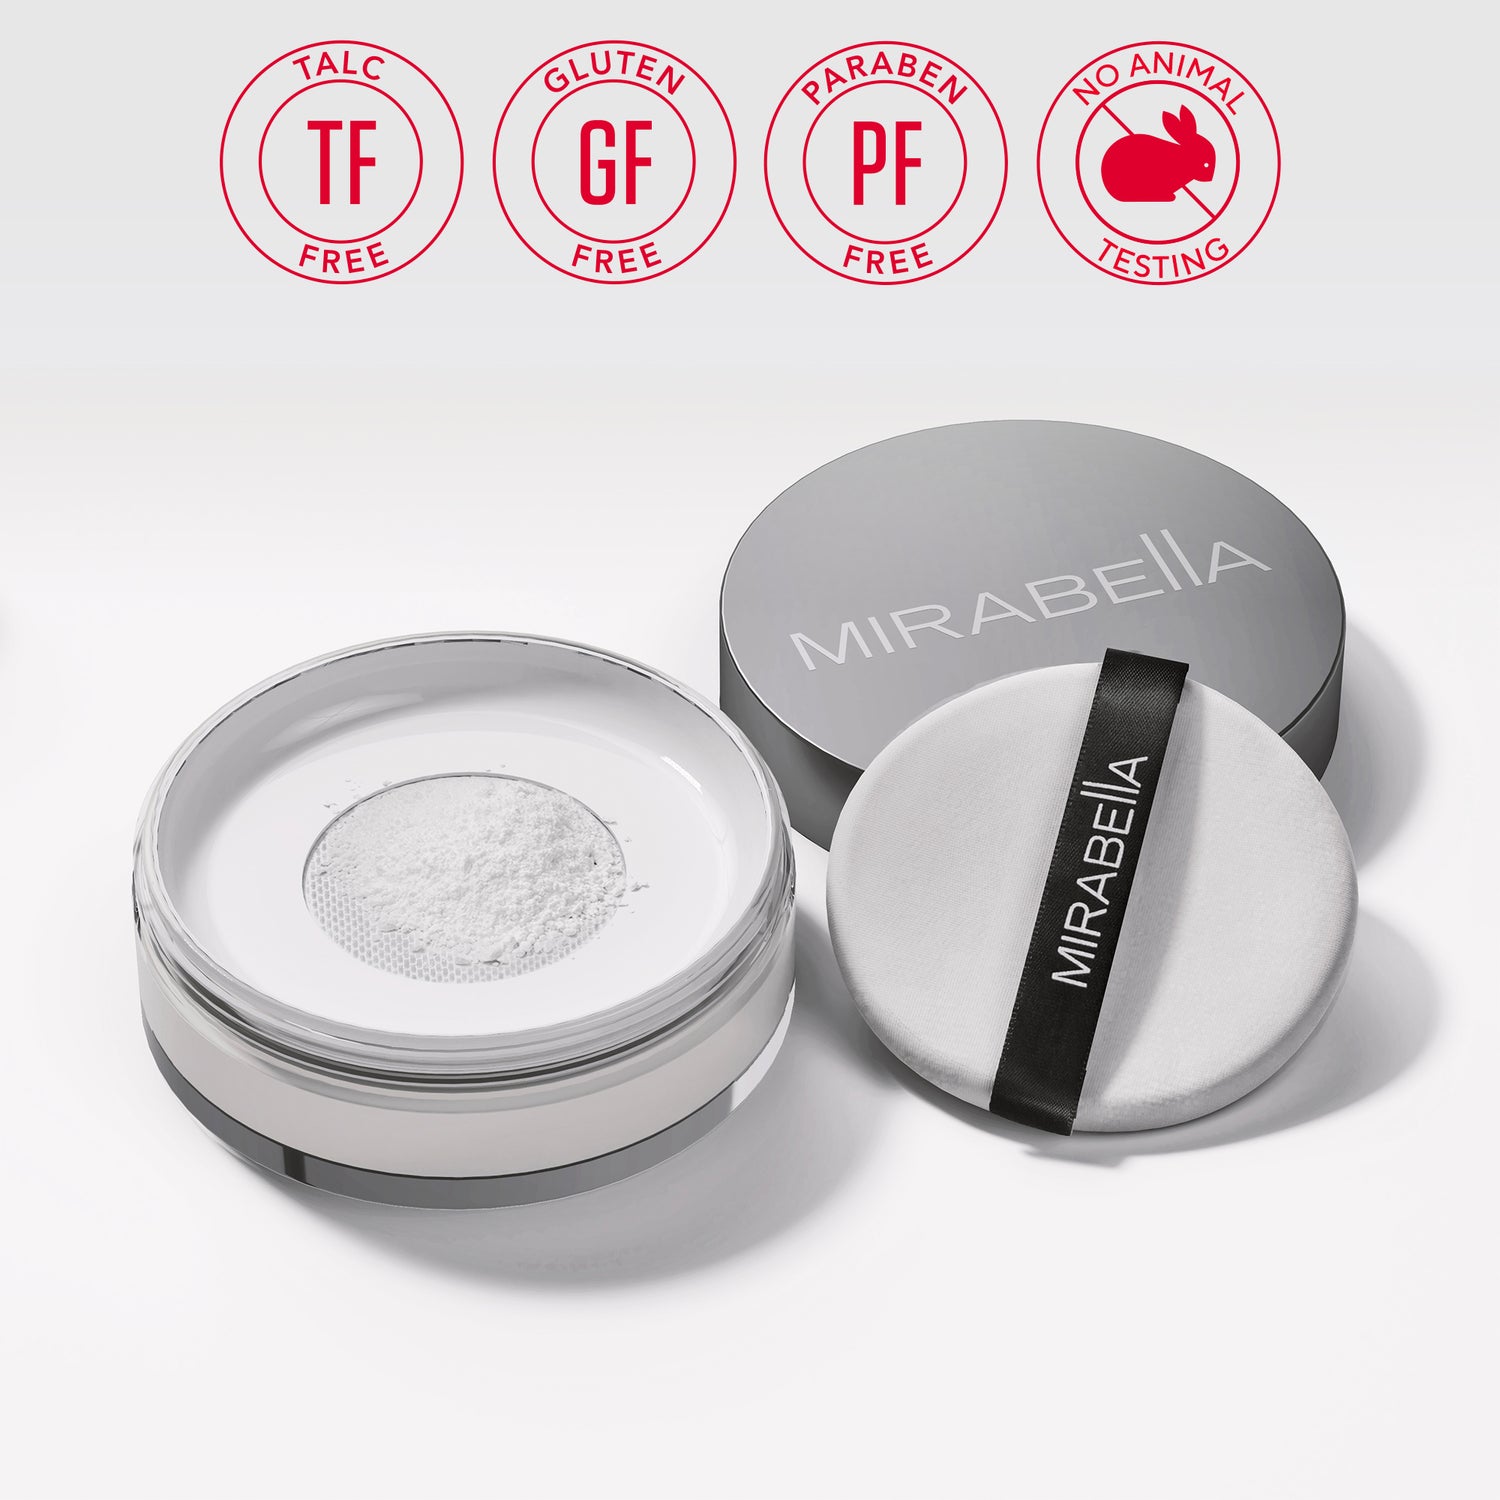 Mirabella Beauty Perfecting Powder - Translucent loose silica powder for setting makeup